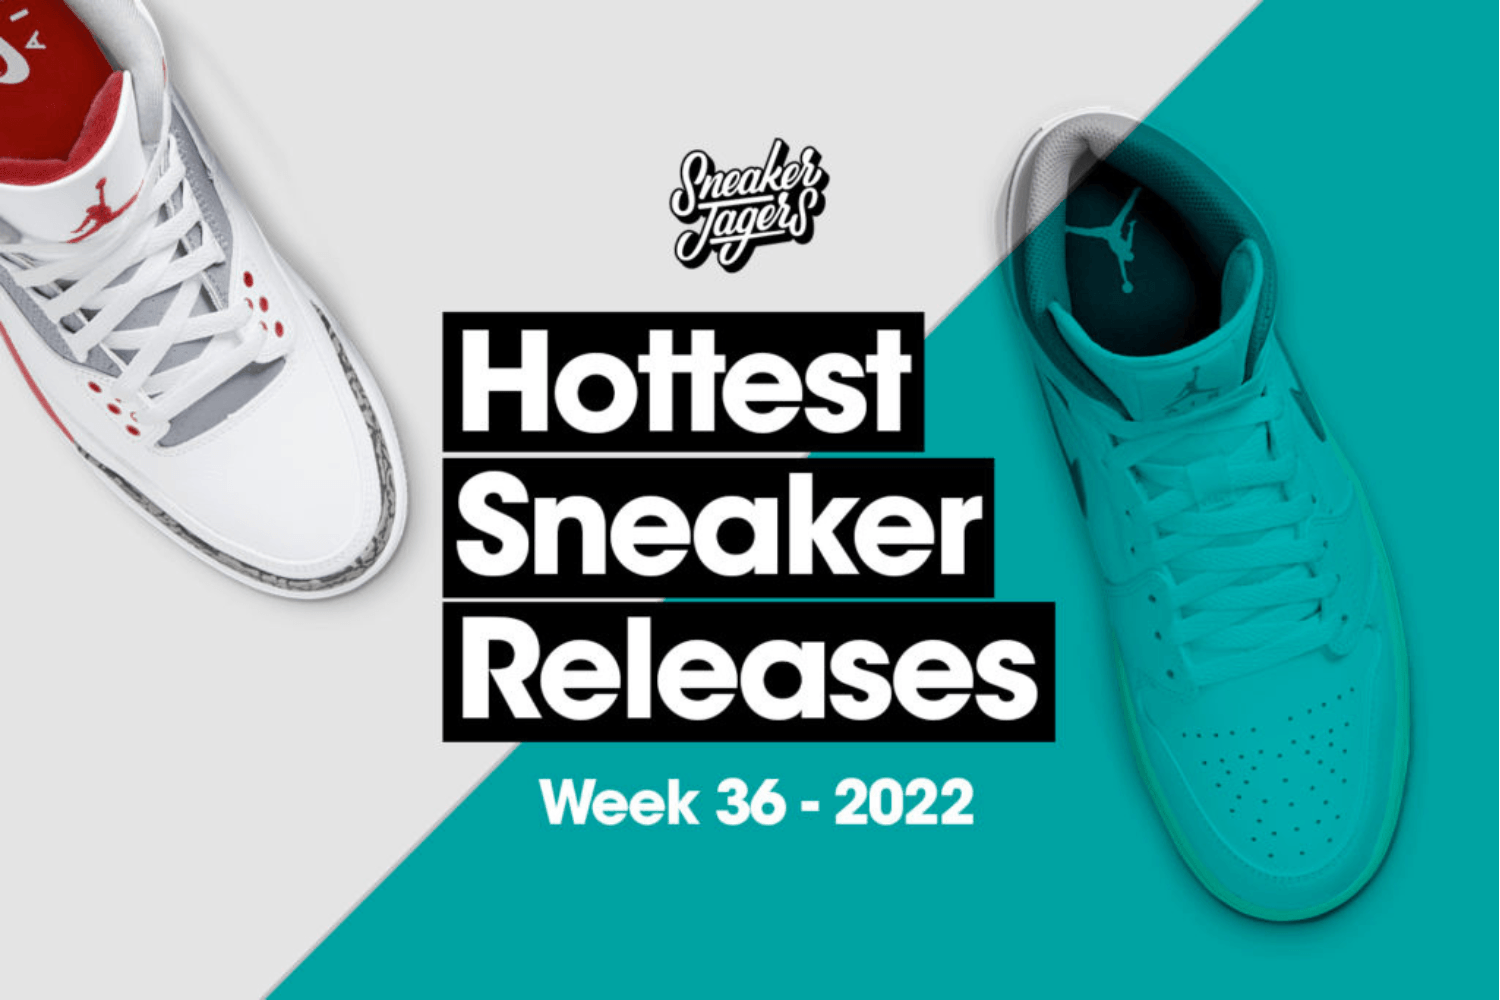 Hottest Sneaker Releases - Week 36